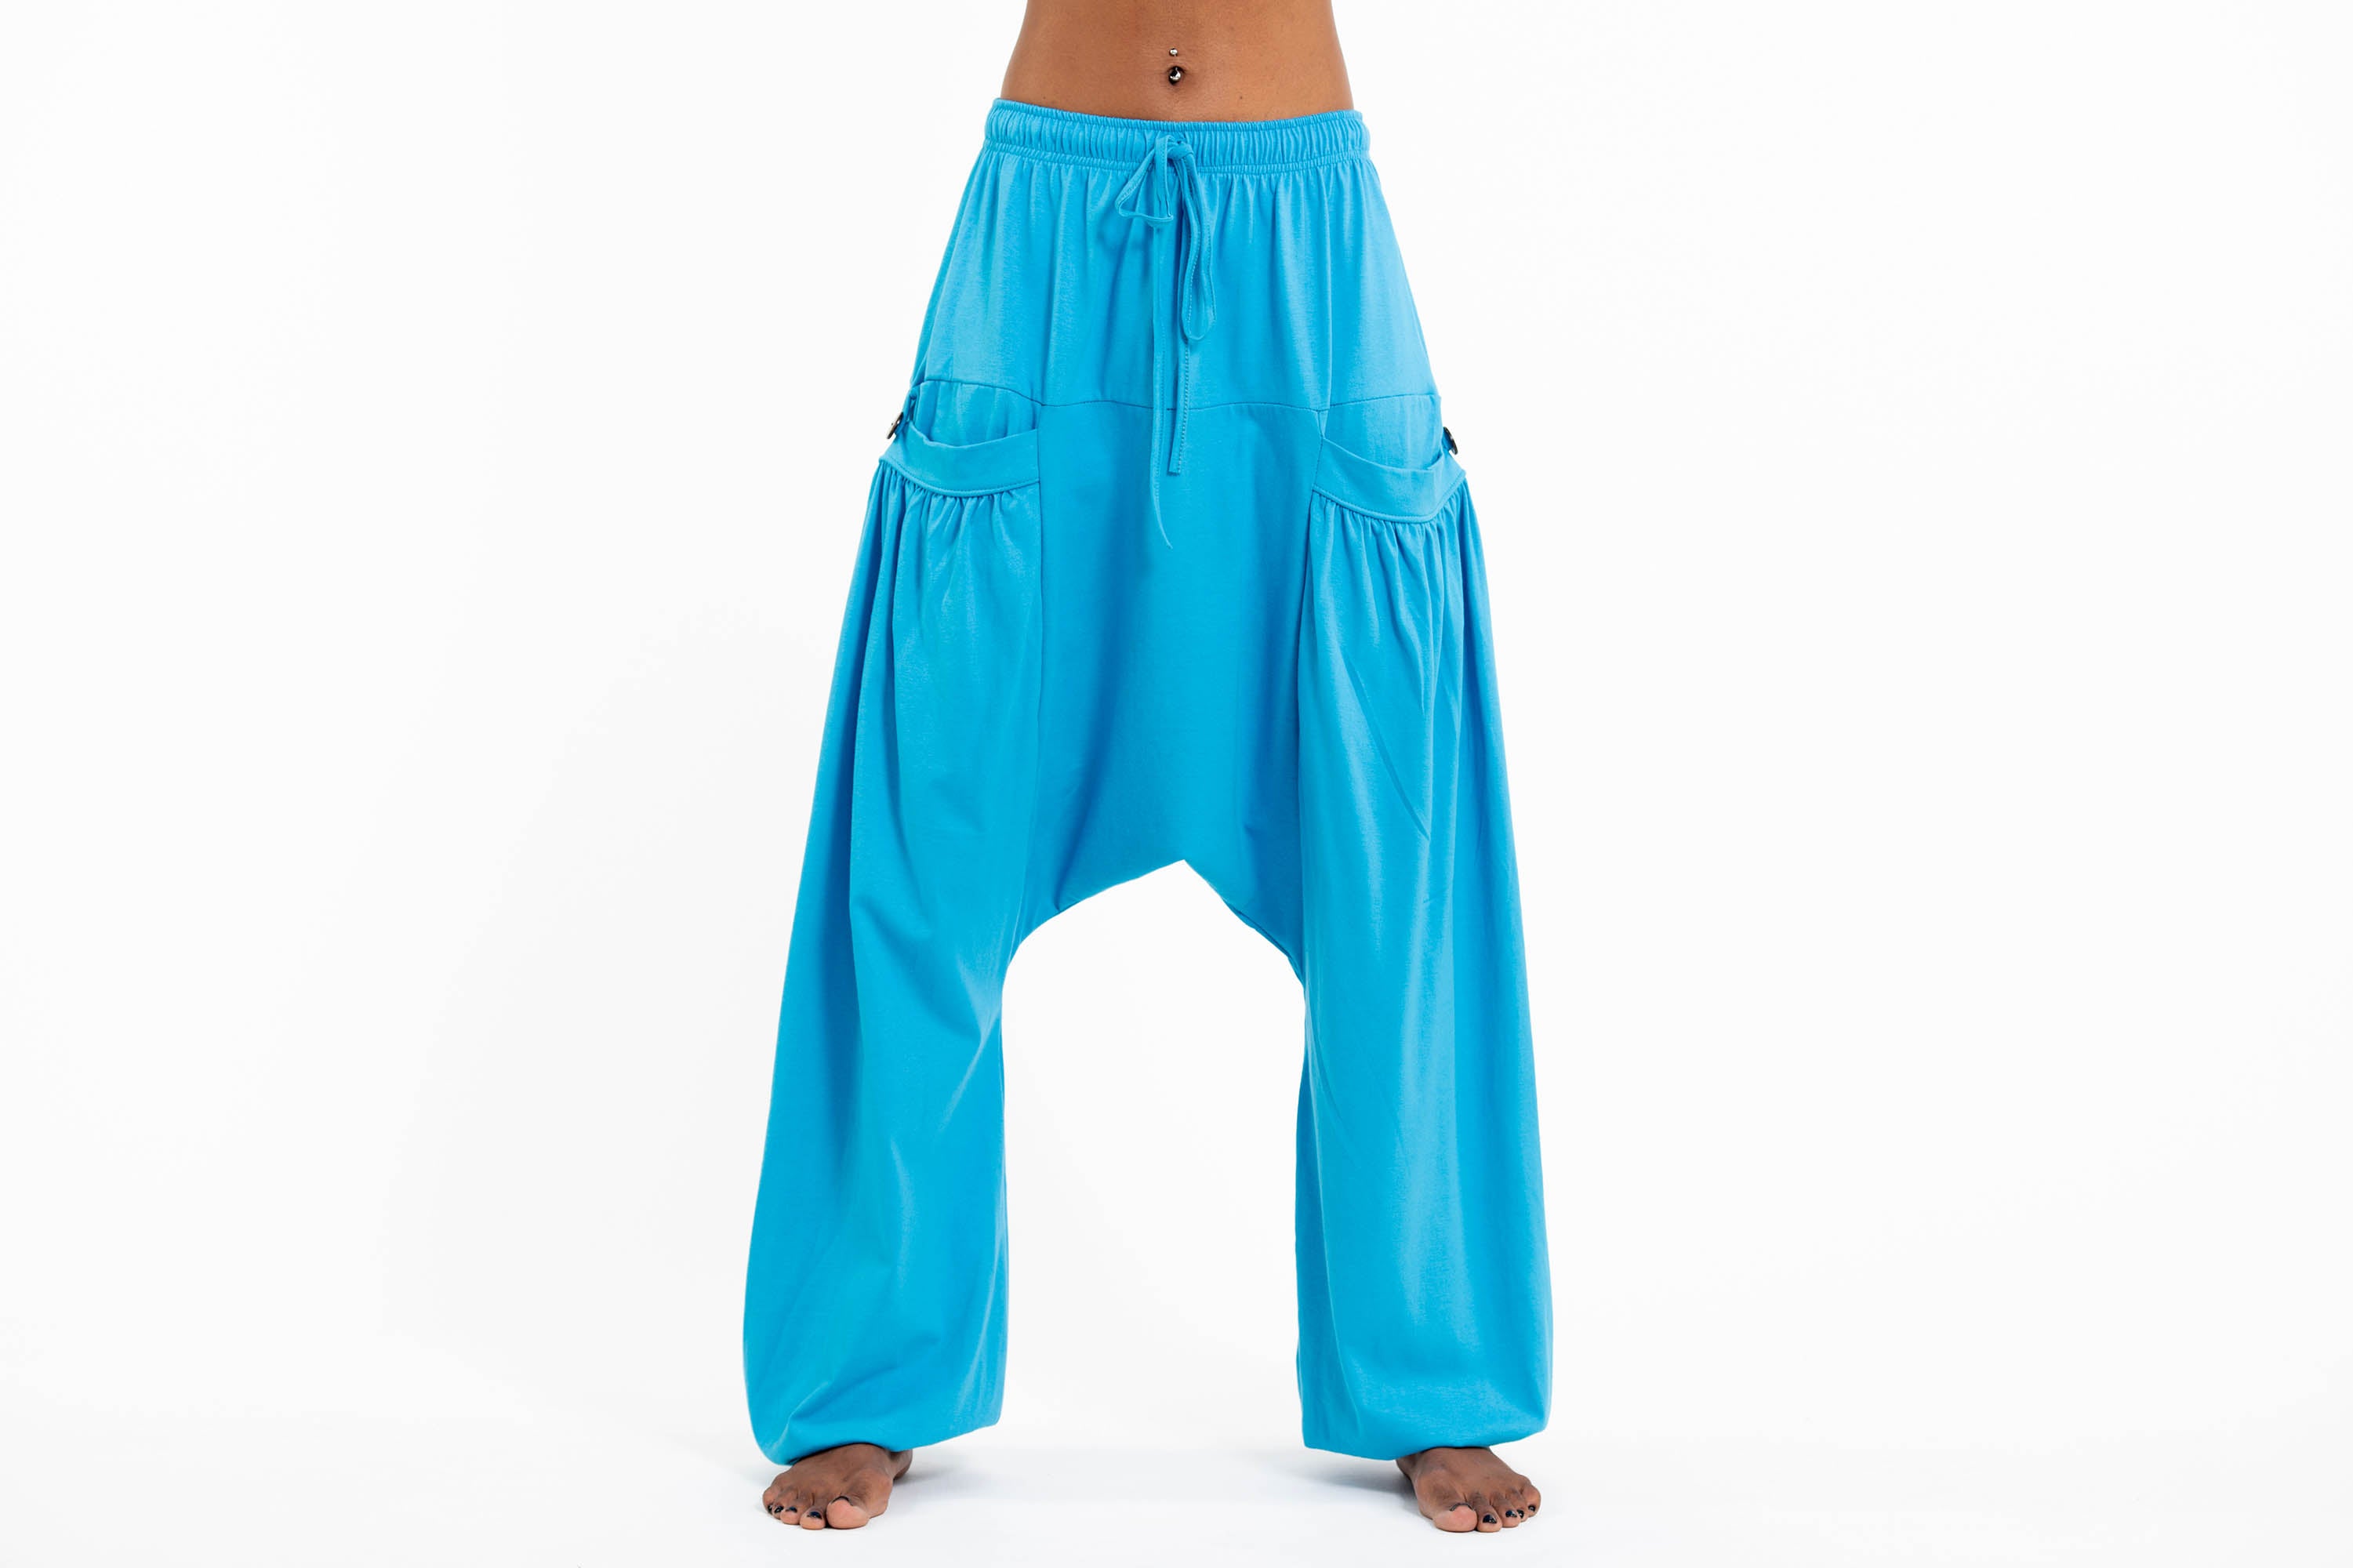 Solid Blue Light Pants Women Cotton in Harem